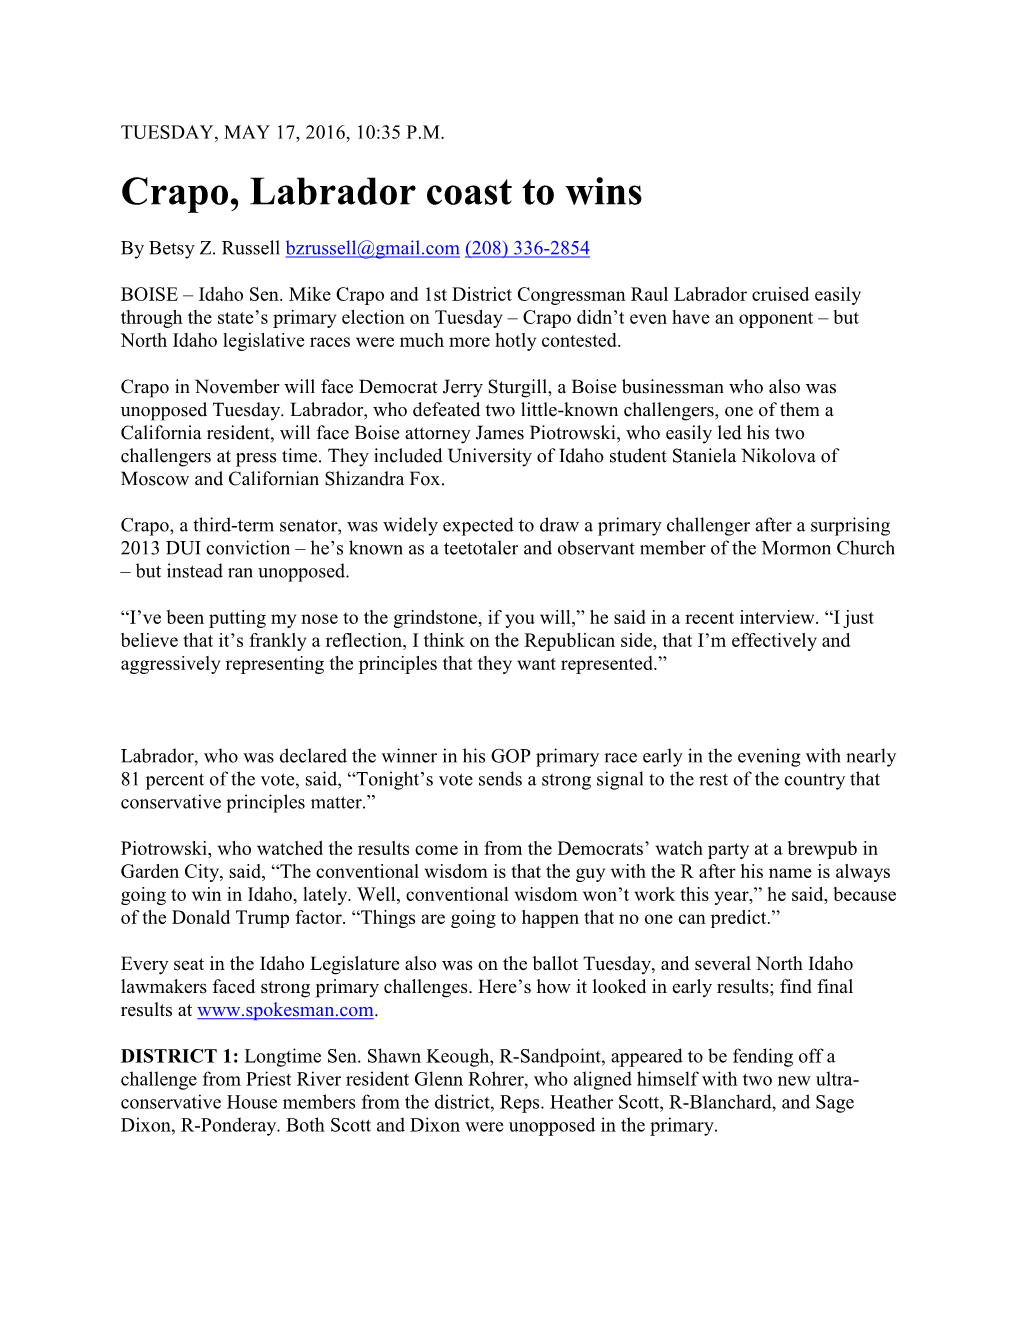 Crapo, Labrador Coast to Wins